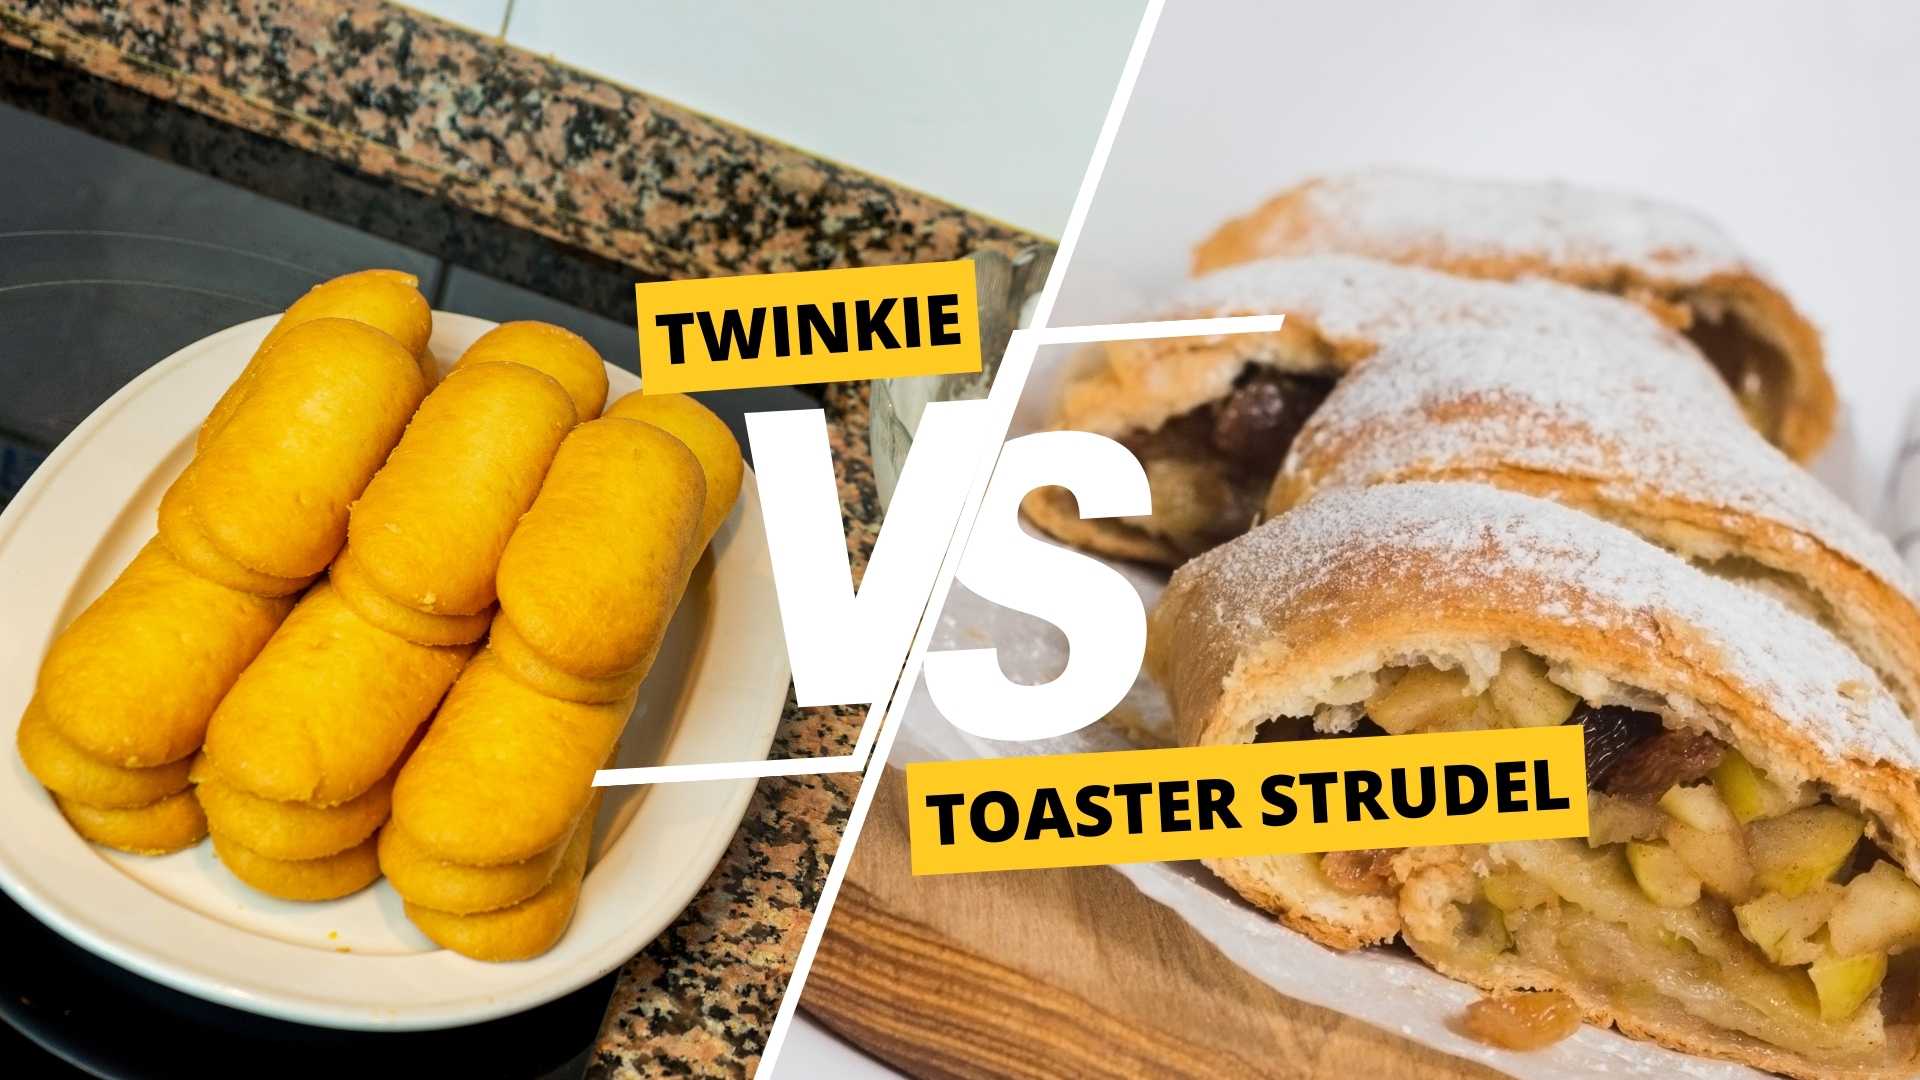 Twinkie vs Toaster Strudel